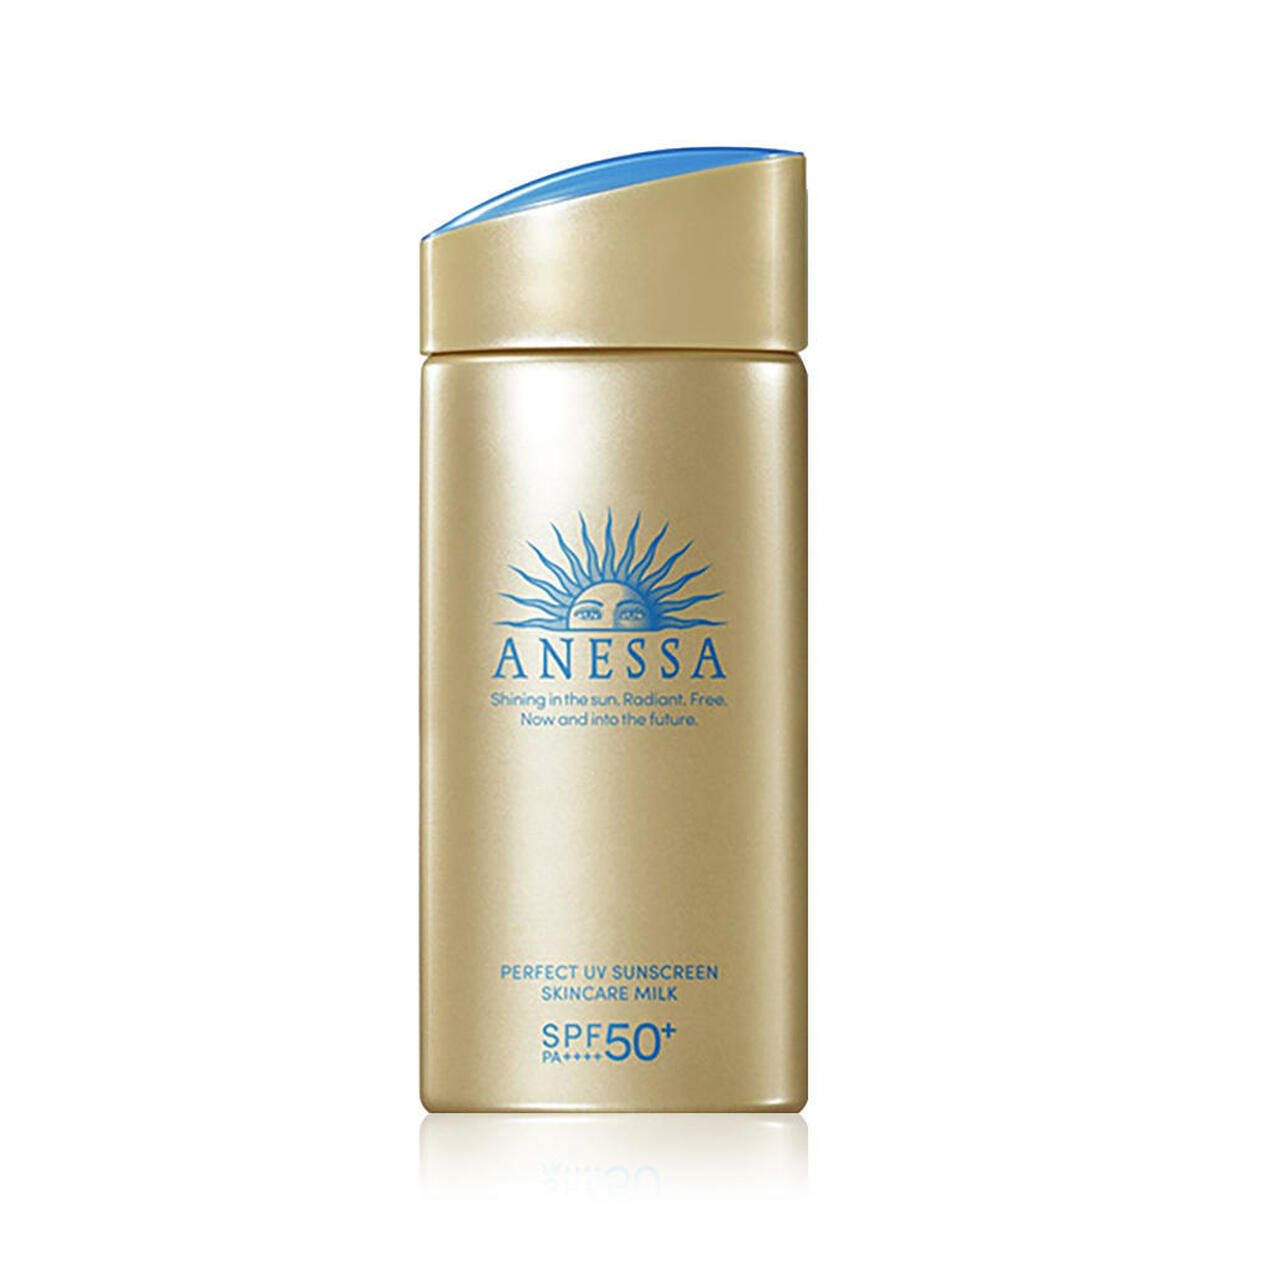 Shiseido Anessa Perfect UV Sunscreen Skincare Milk SPF50+ PA++++ 